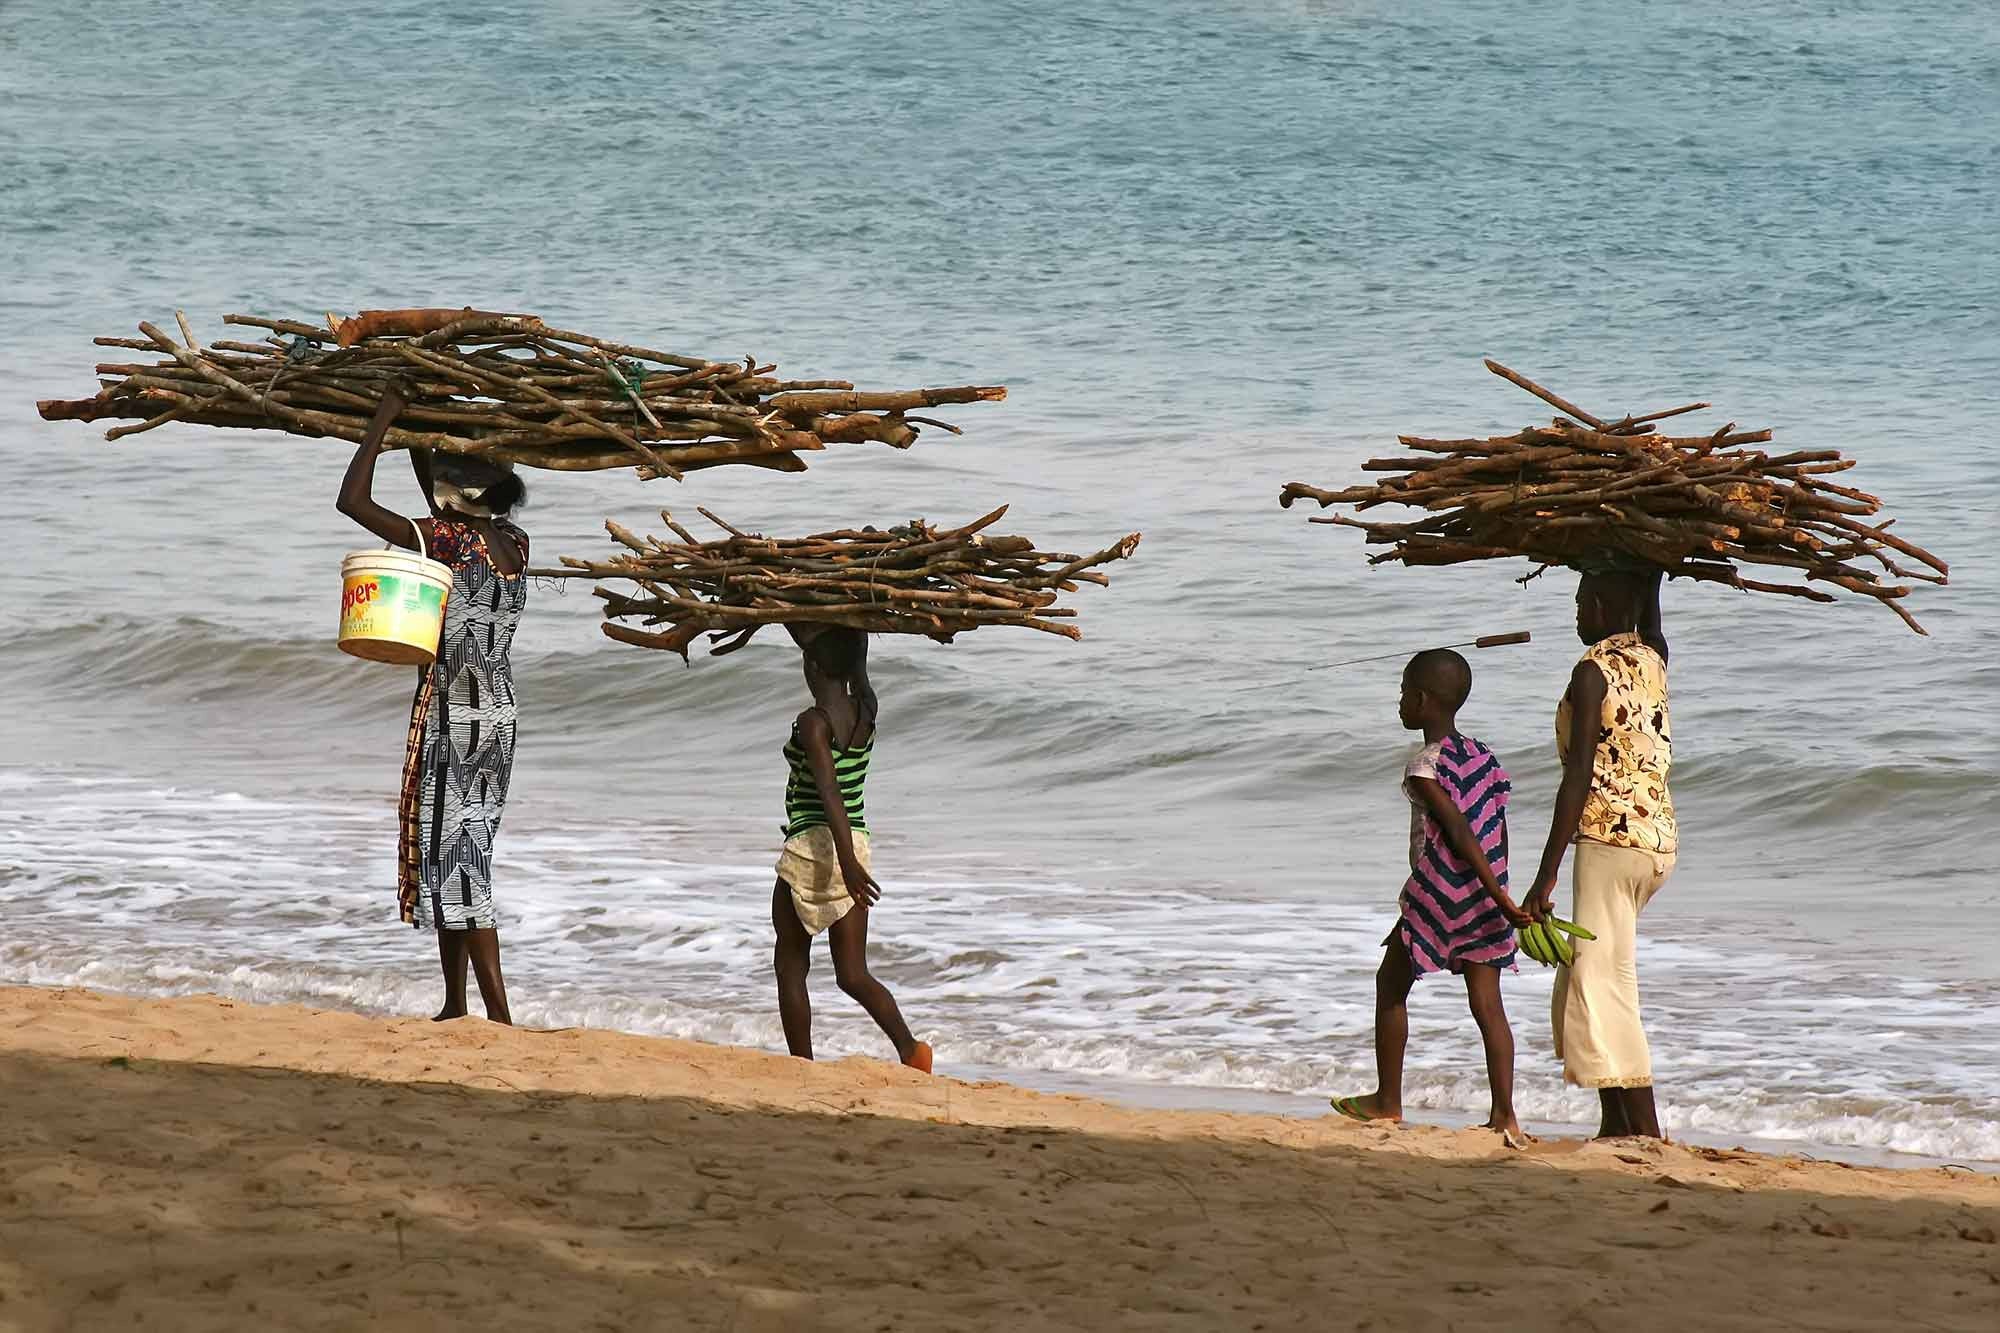 http://www.maierandmaierphotography.com/wp-content/uploads/2013/03/ghana-africa-takoradi-beach-family-walking-home.jpg